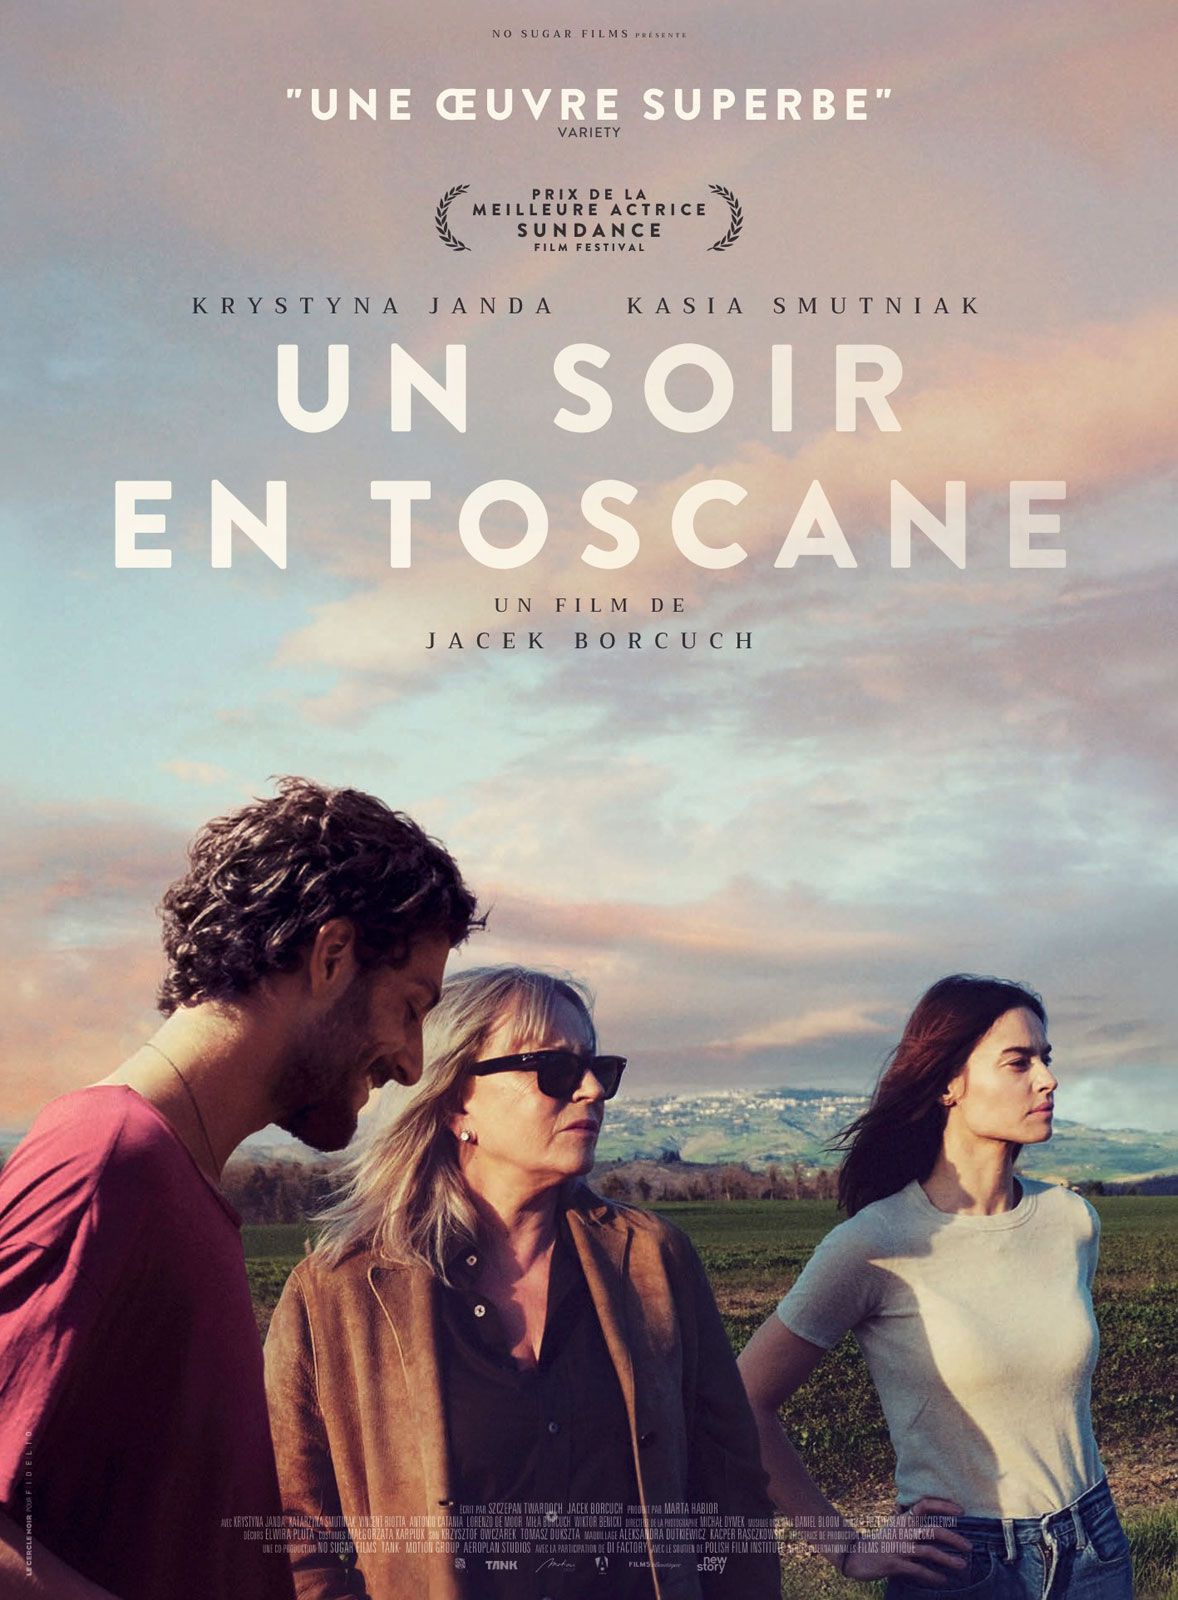 Un soir en Toscane - Film (2020) streaming VF gratuit complet